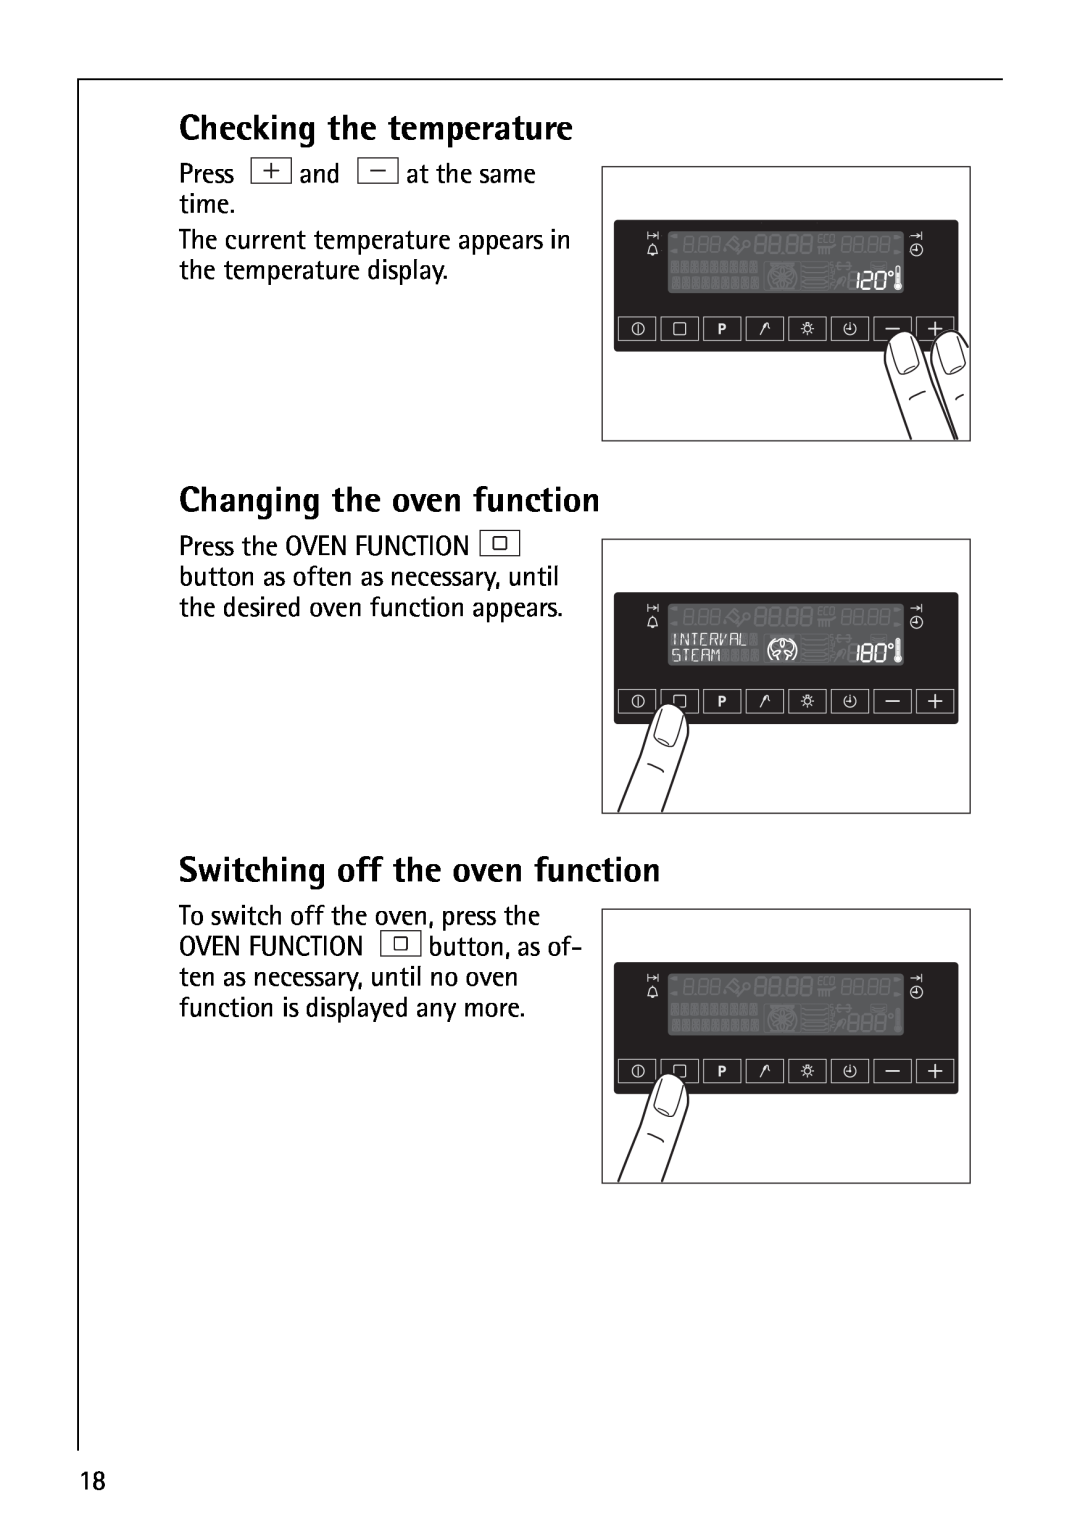 AEG B8920-1 manual Checking the temperature, Changing the oven function, Switching off the oven function 